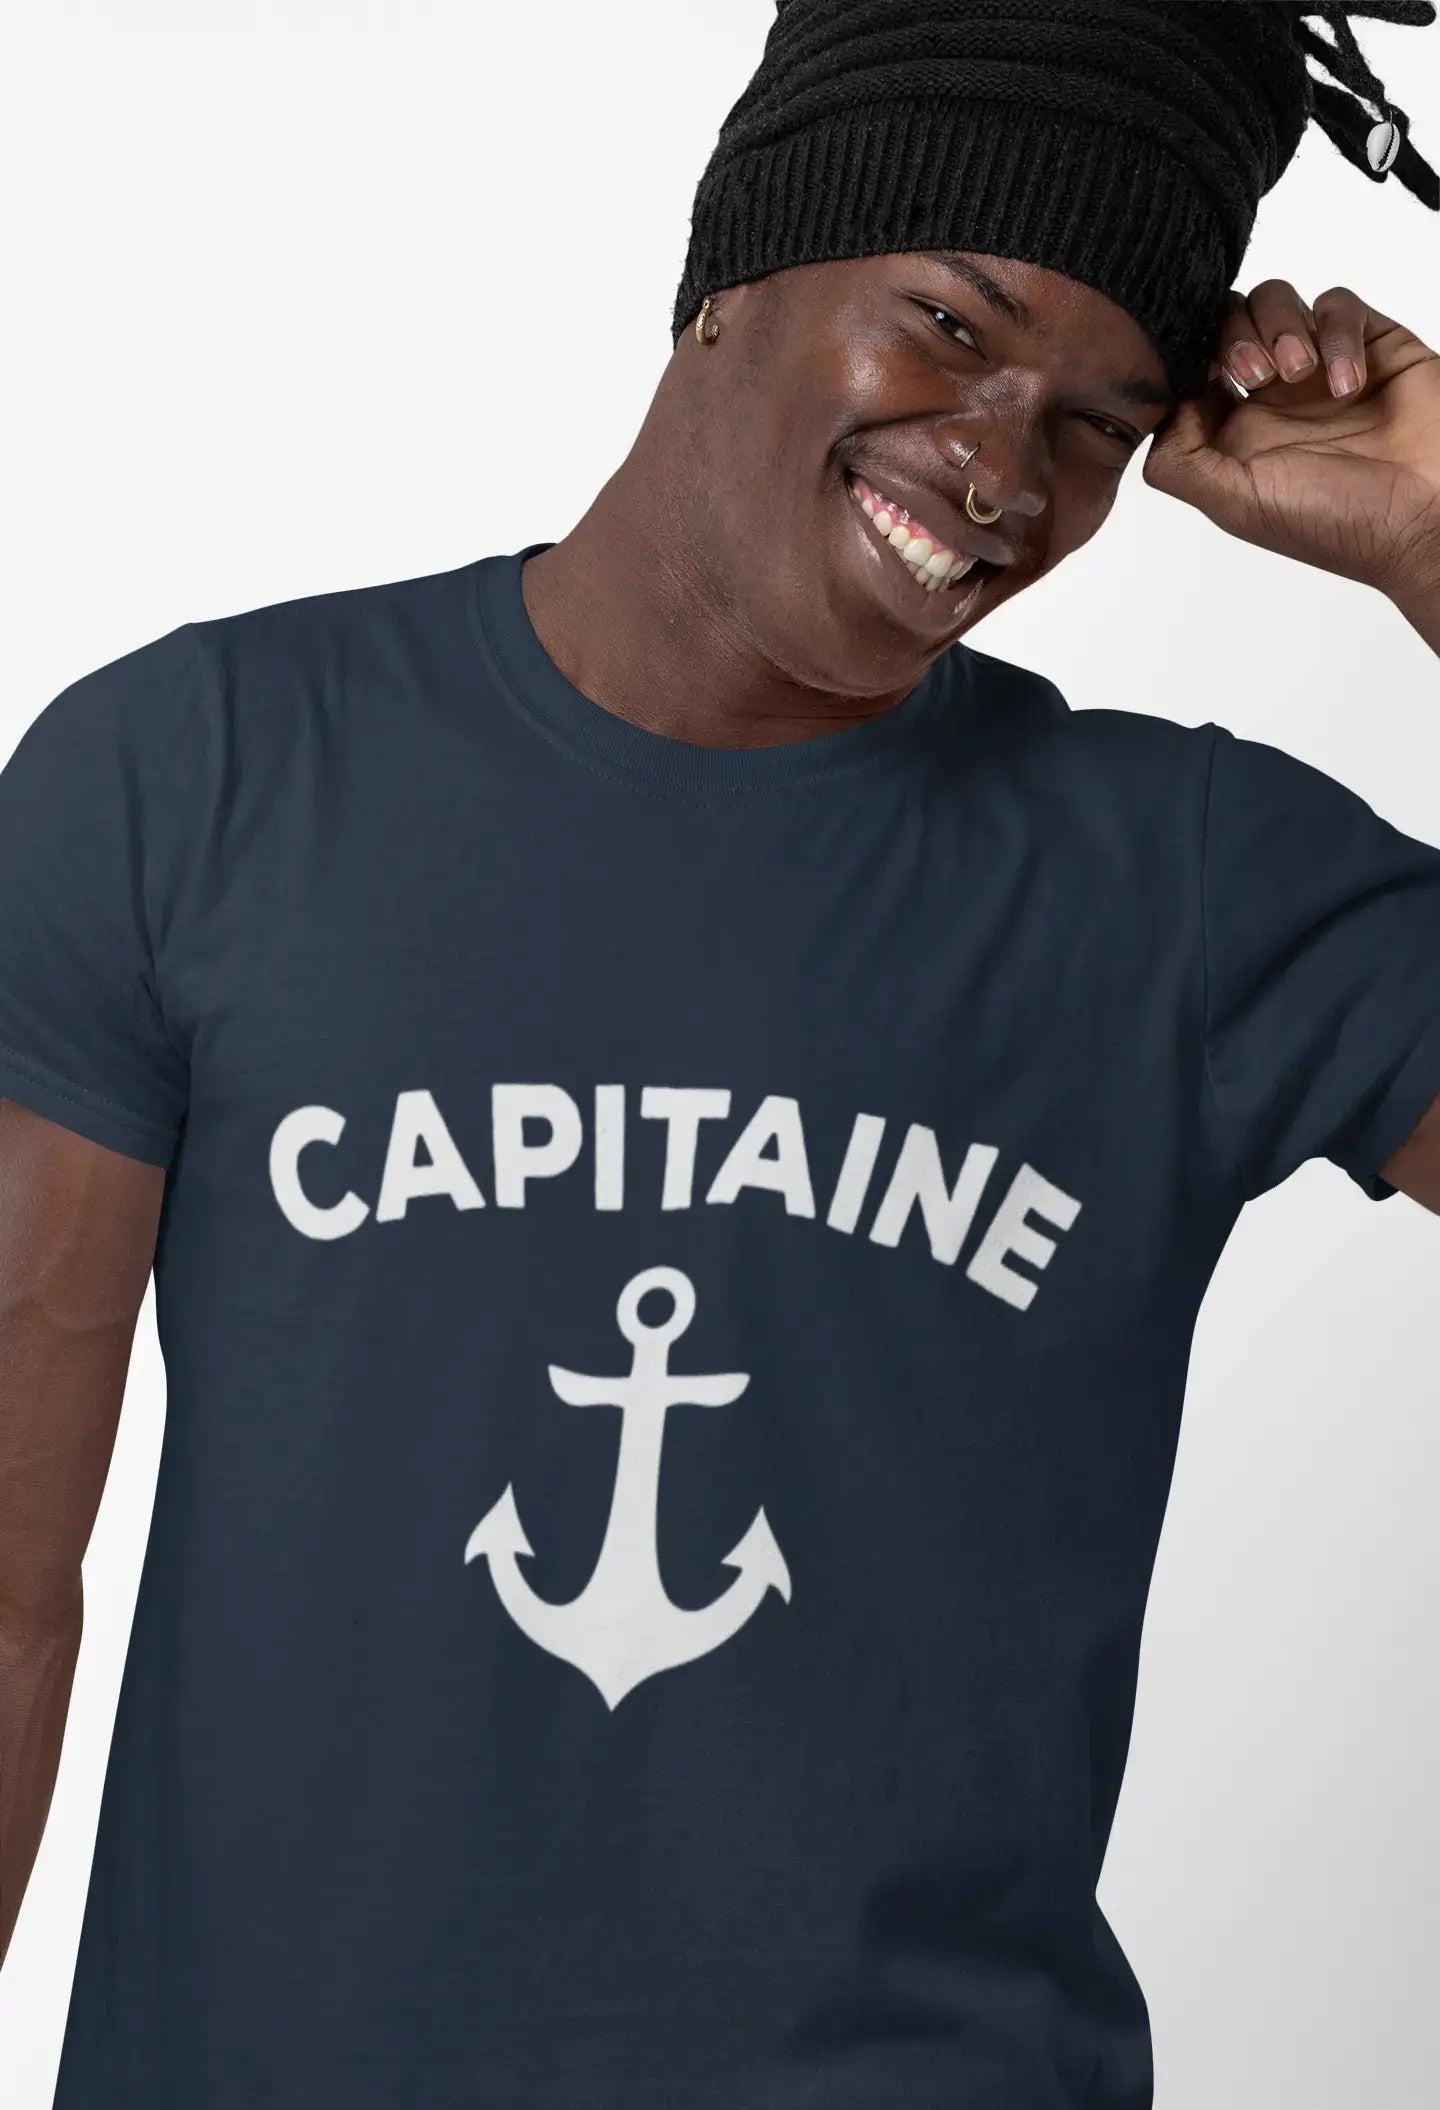 Men's Vintage Tee Shirt Graphic T shirt Capitaine Navy Round Neck